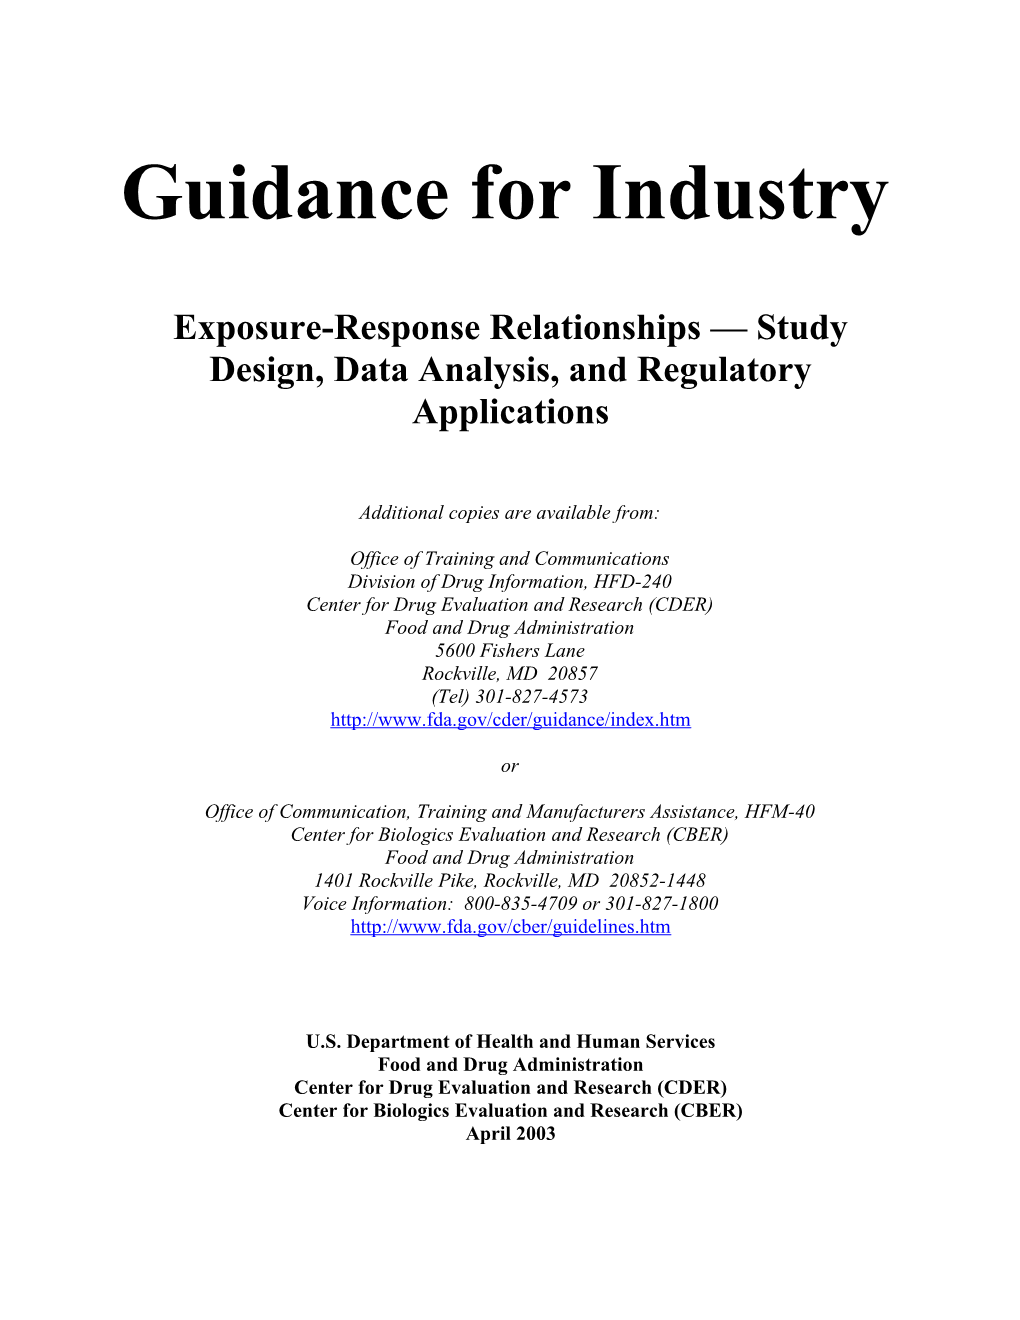 Exposure-Response Relationships Study Design, Data Analysis, and Regulatory Applications